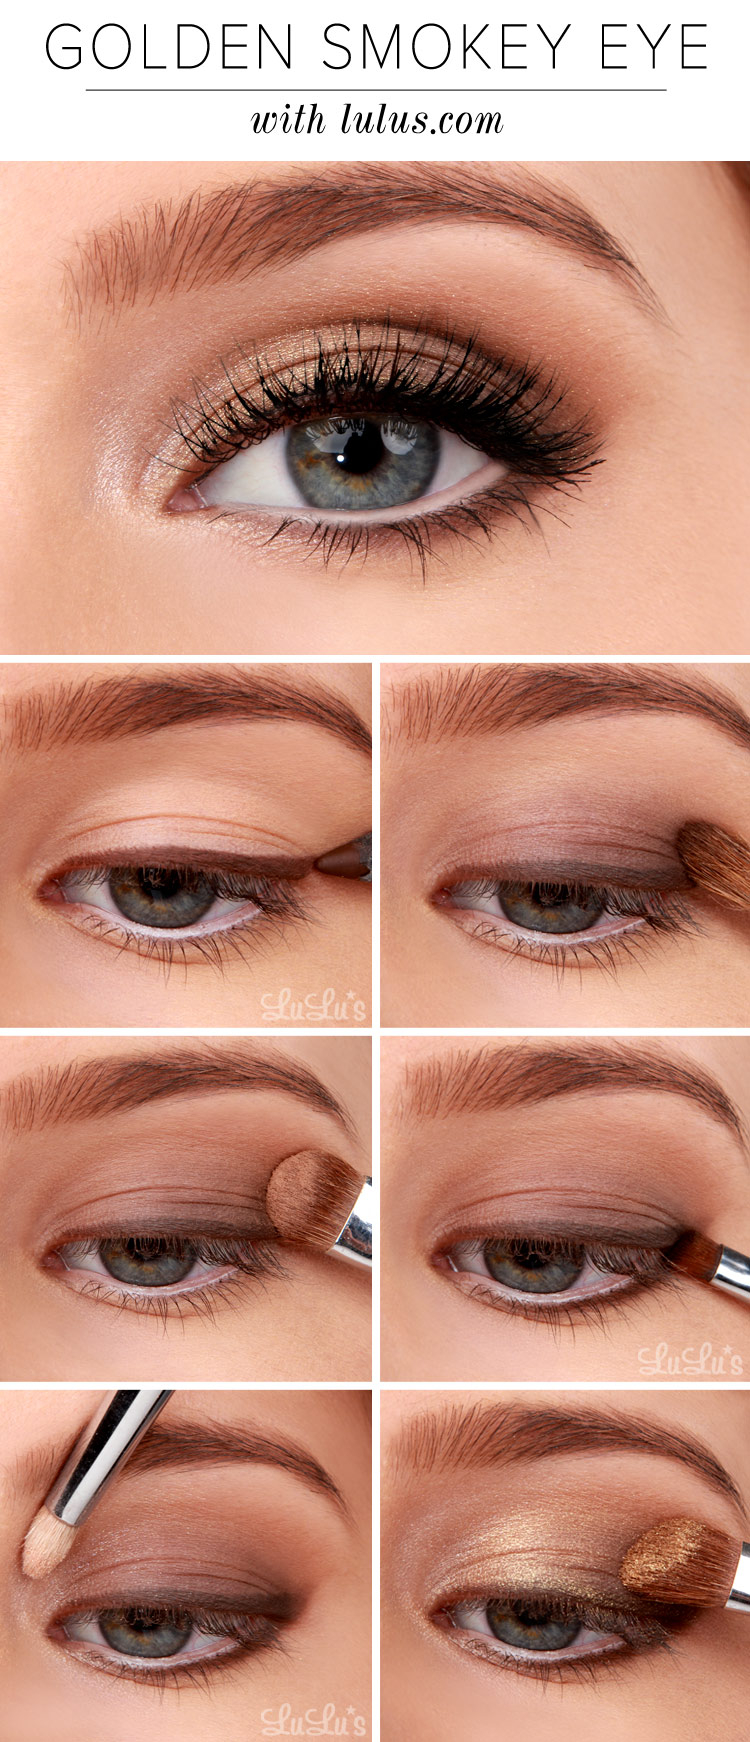 Smoking Eye Makeup Steps Lulus How To Golden Smokey Eyeshadow Tutorial Lulus Fashion Blog